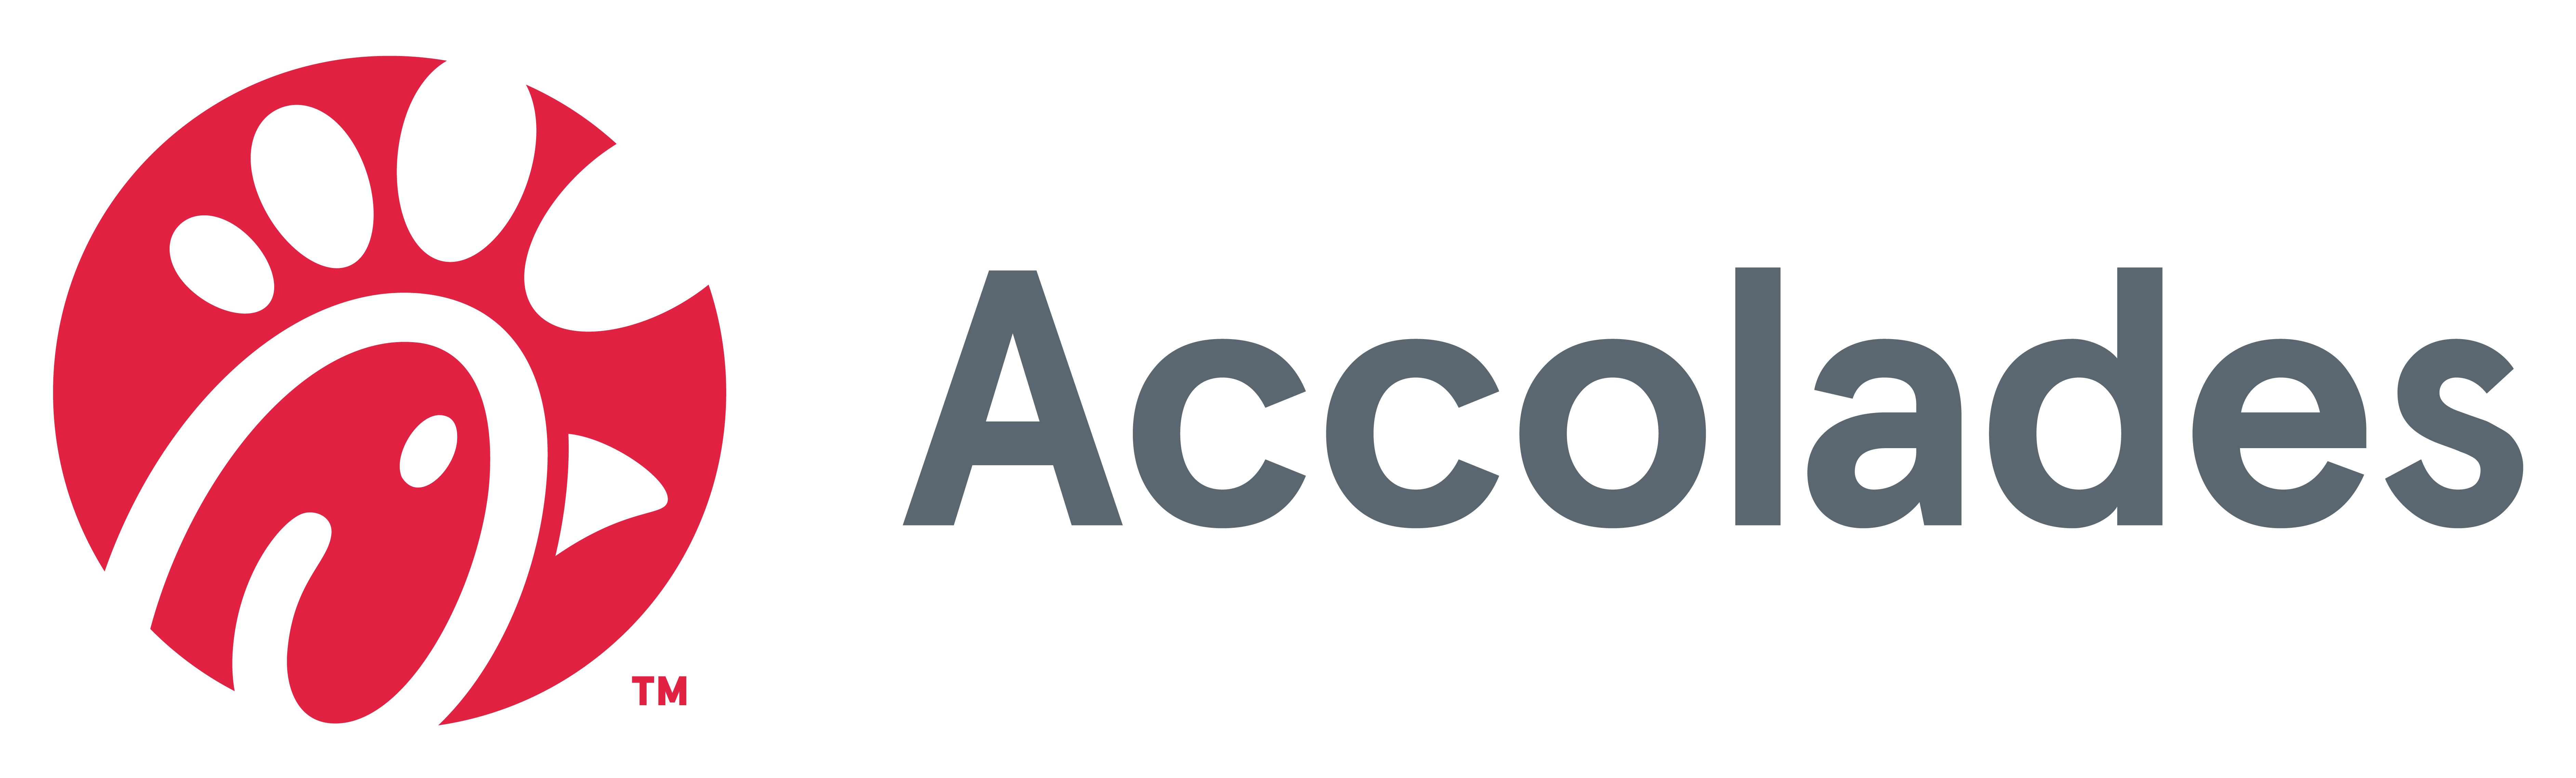 Chick-fil-A Accolades Logo